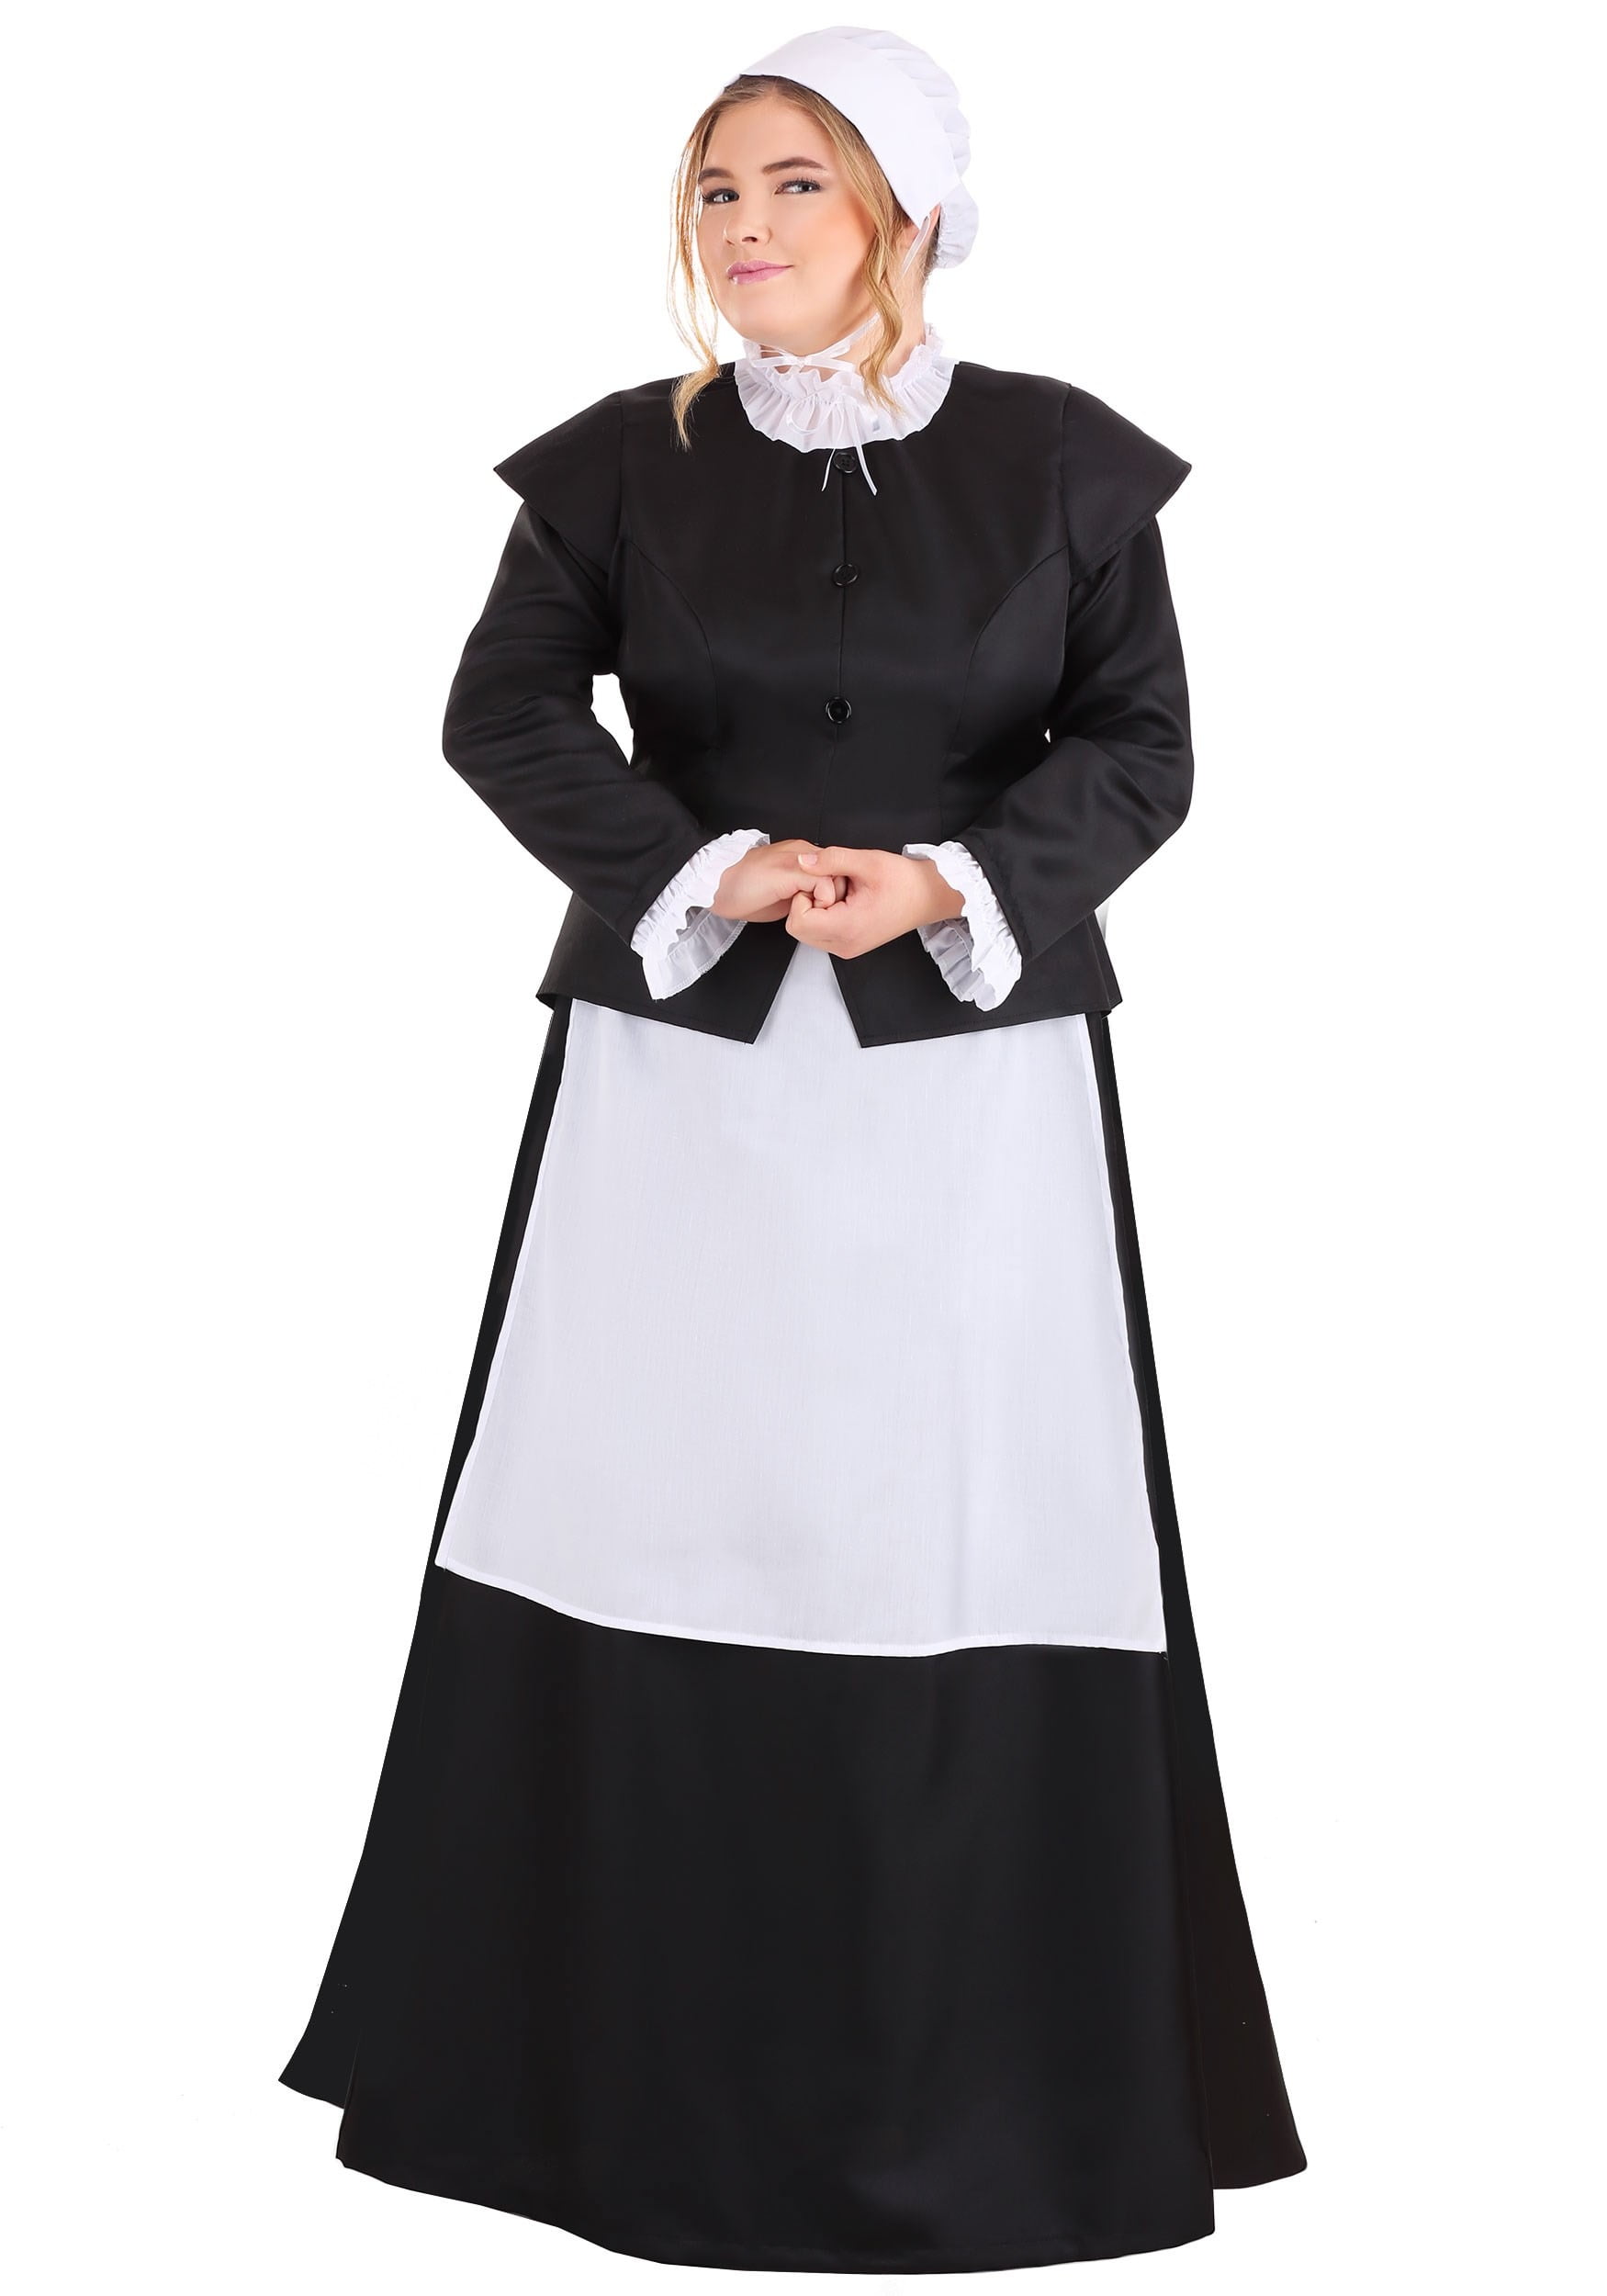 Plus Size Women's Thankful Pilgrim Costume 